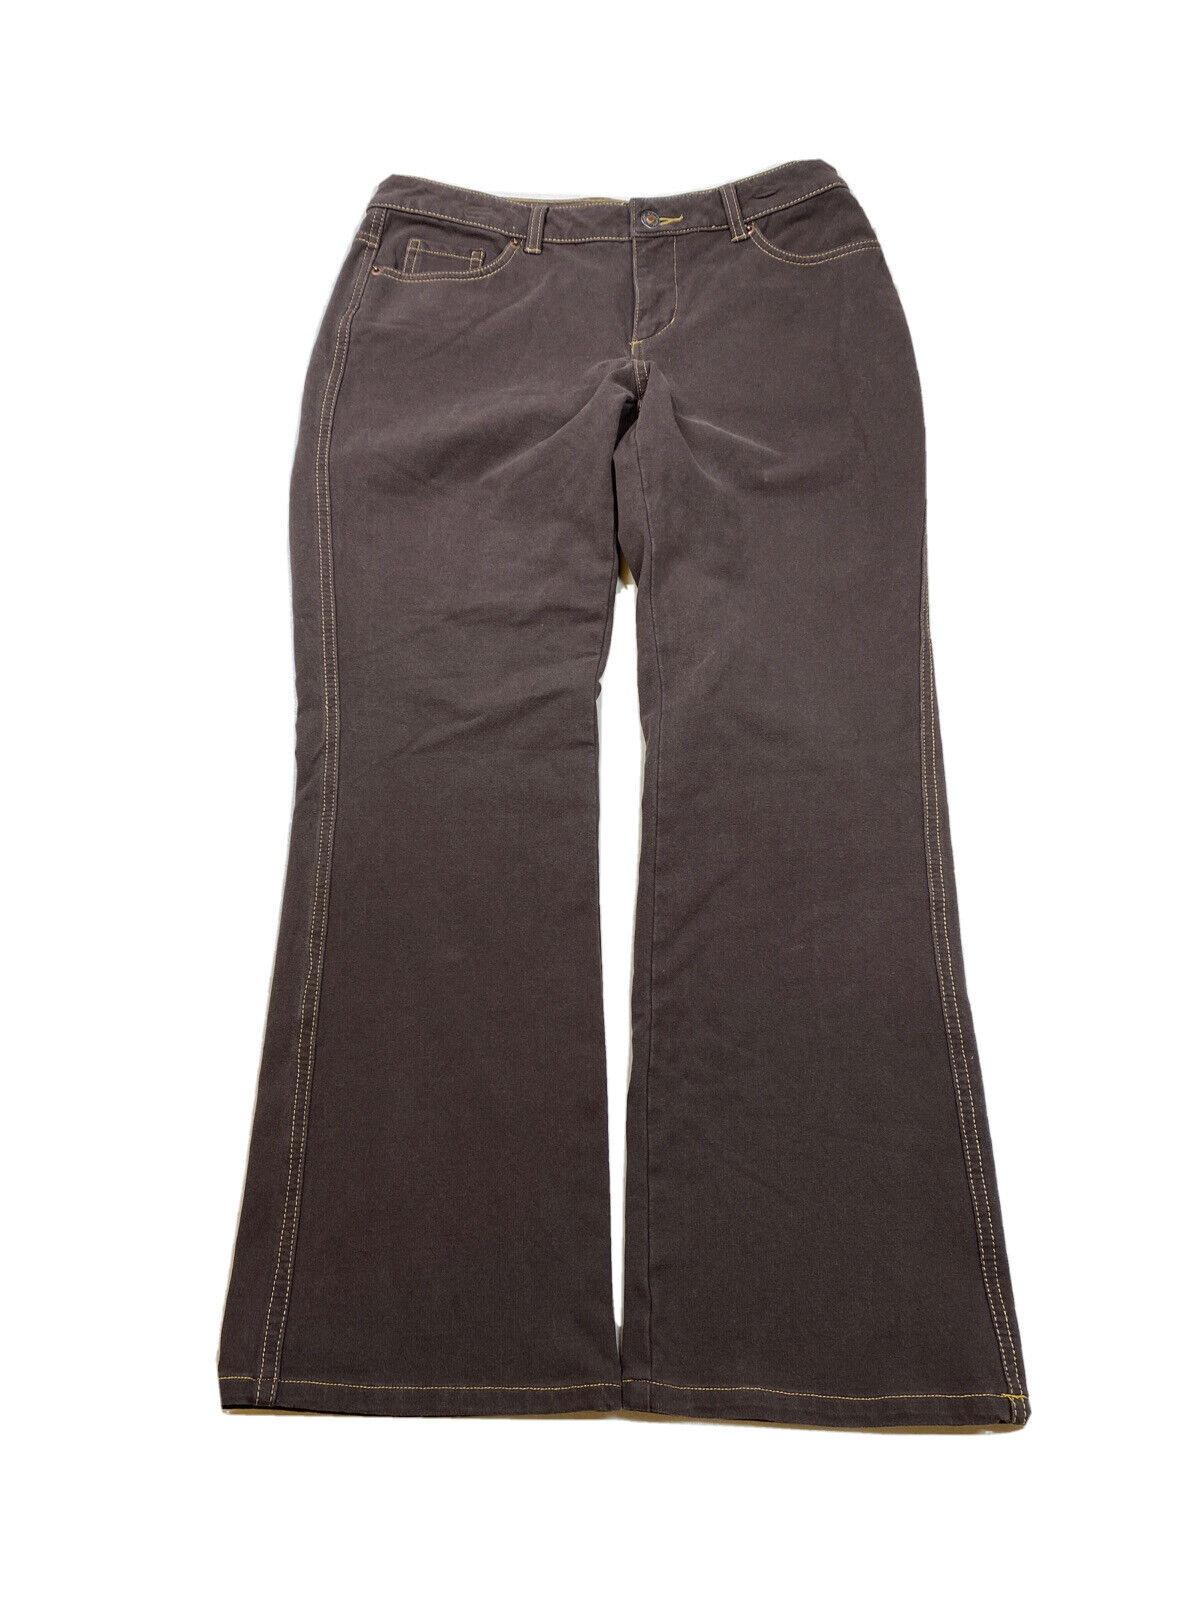 Coldwater Creek Women's Brown Bootcut Jeans - 10 Petite